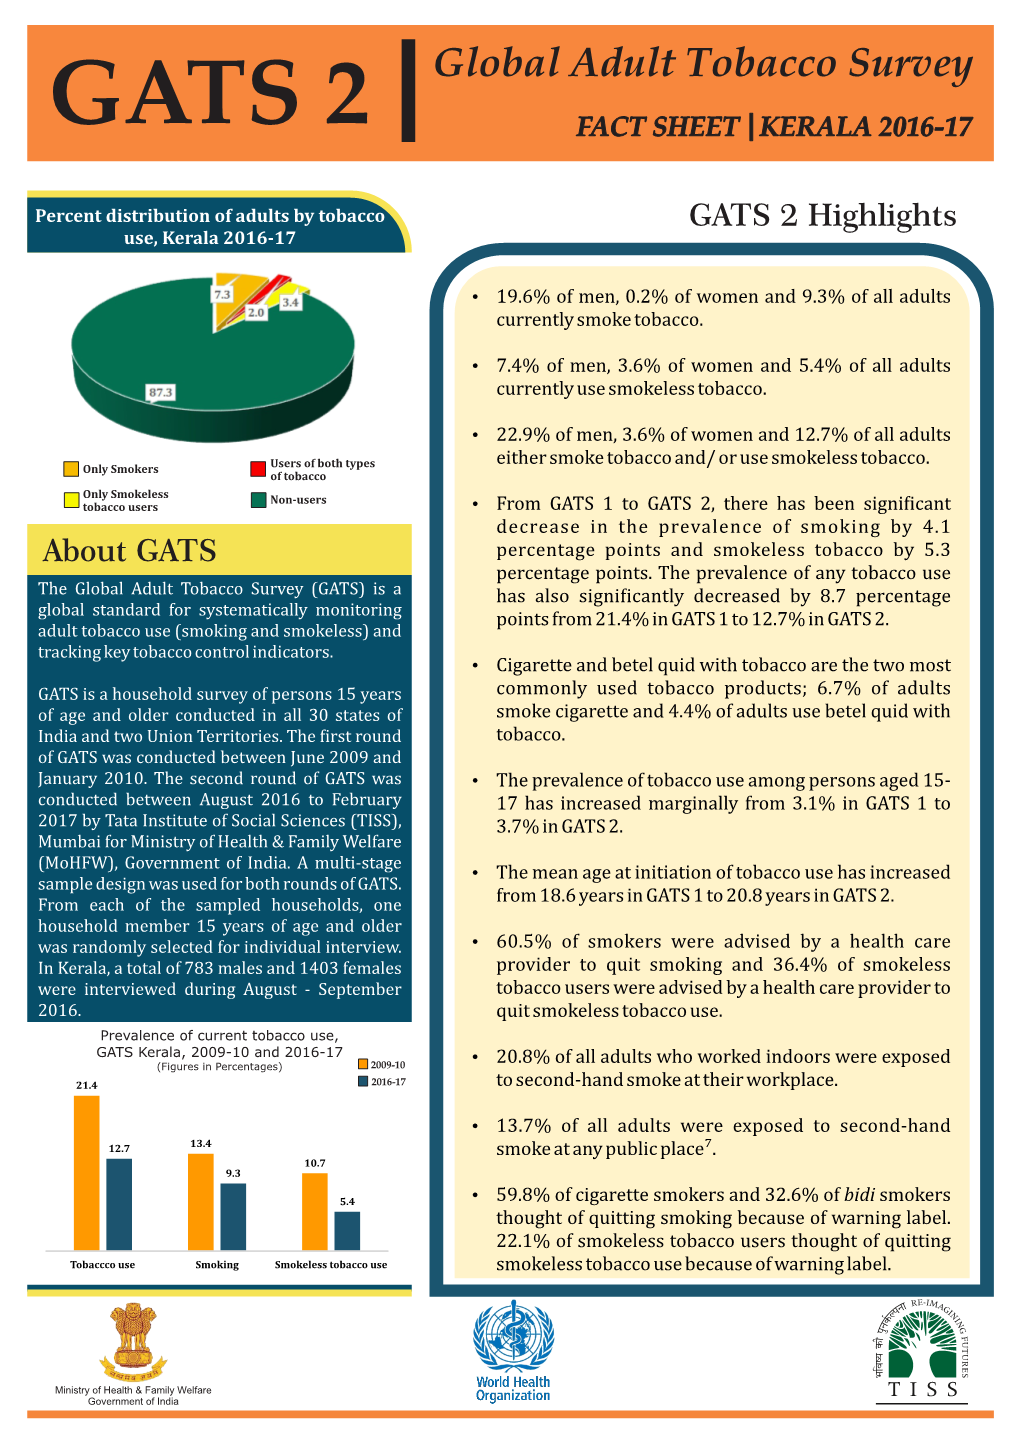 Gats 2 Fact Sheet | Kerala 2016-17